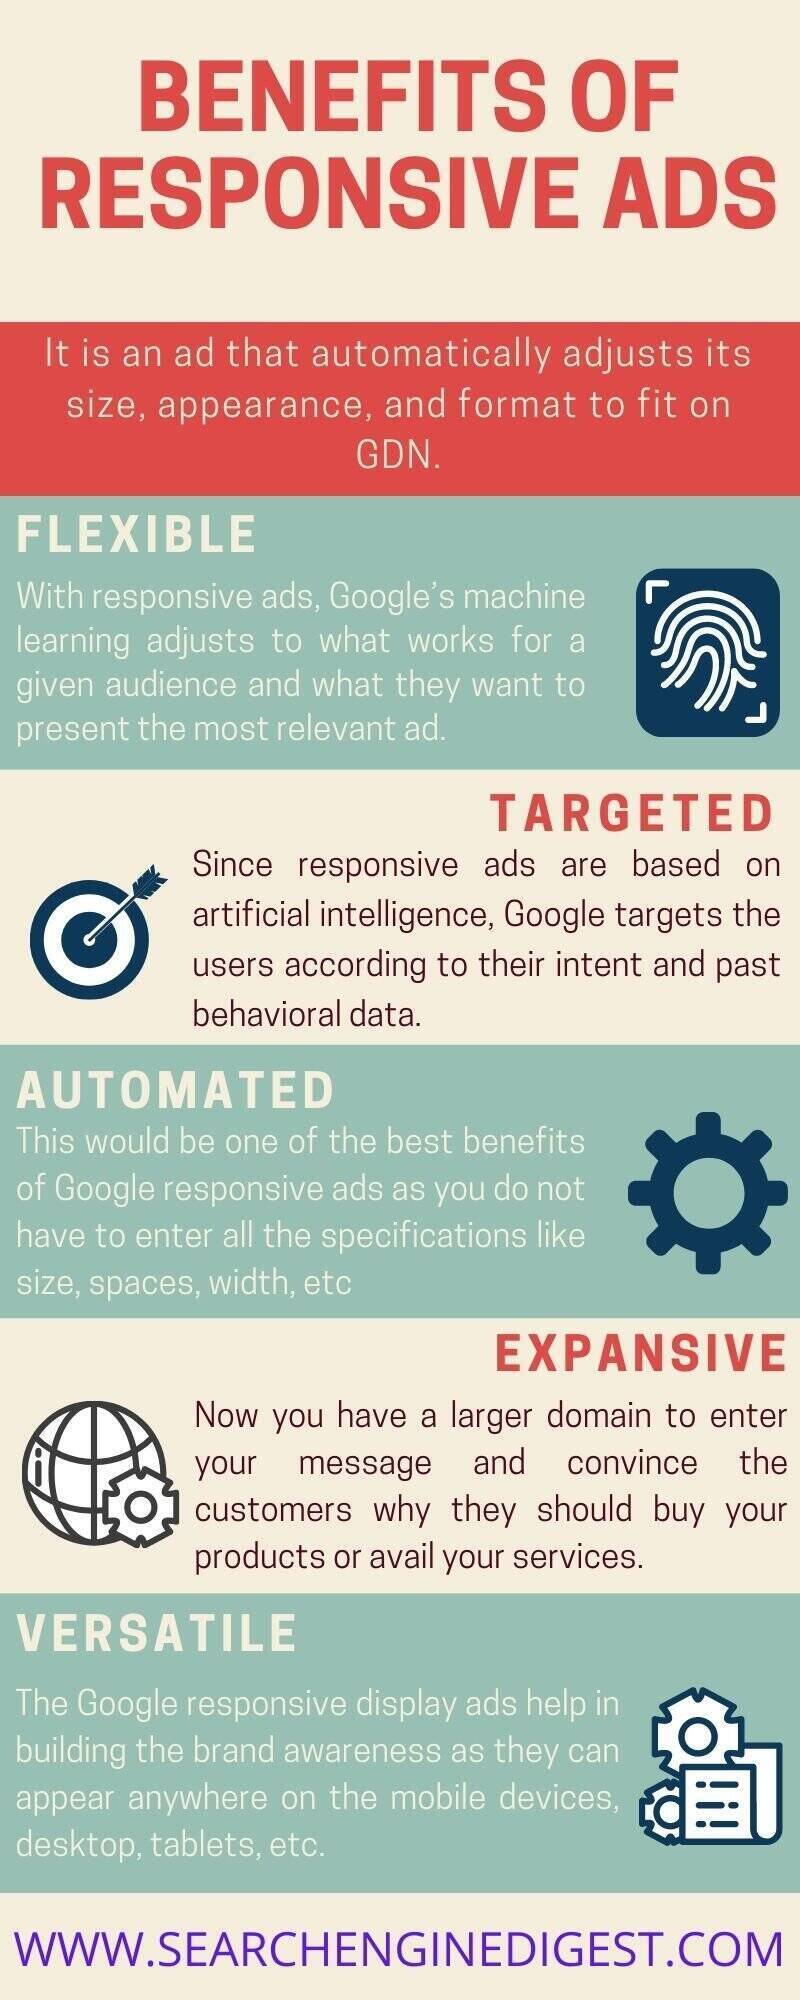 Google responsive ads - infographic